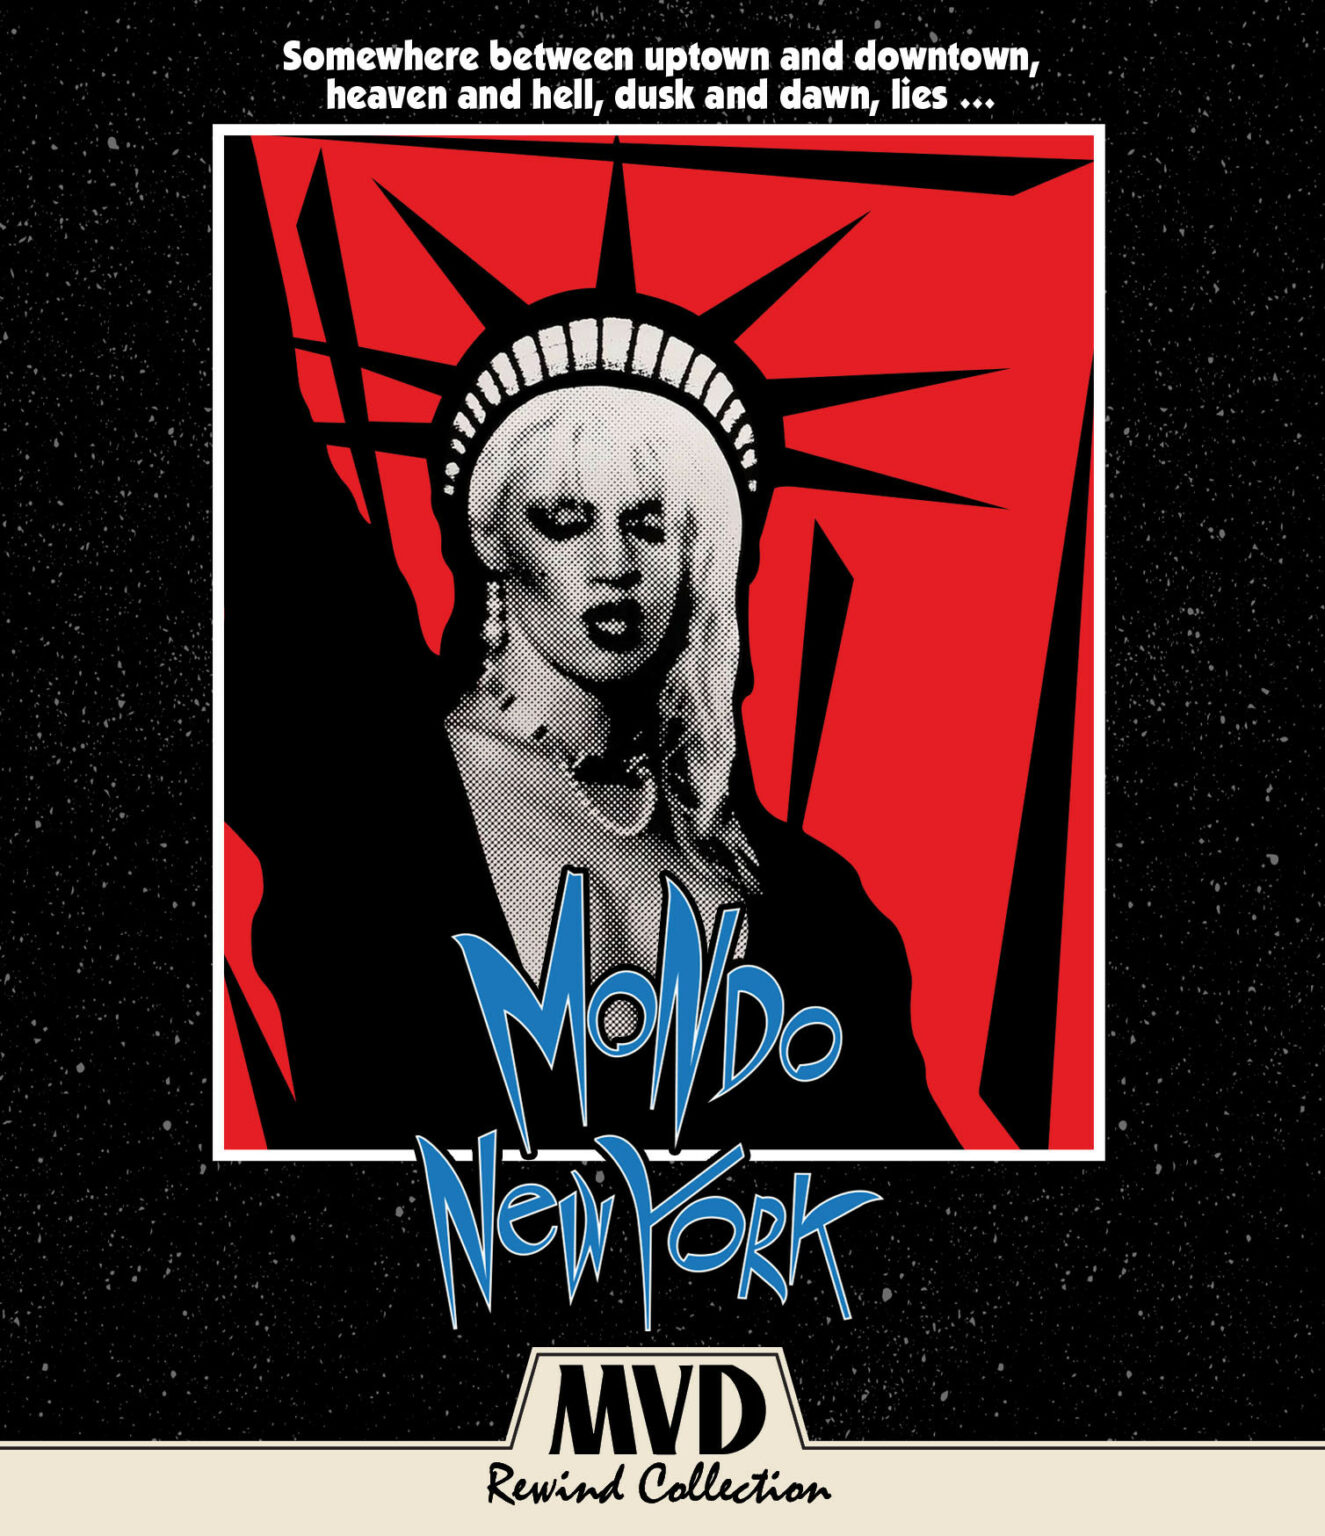 Blu Ray Review Mondo New York Inside Pulse